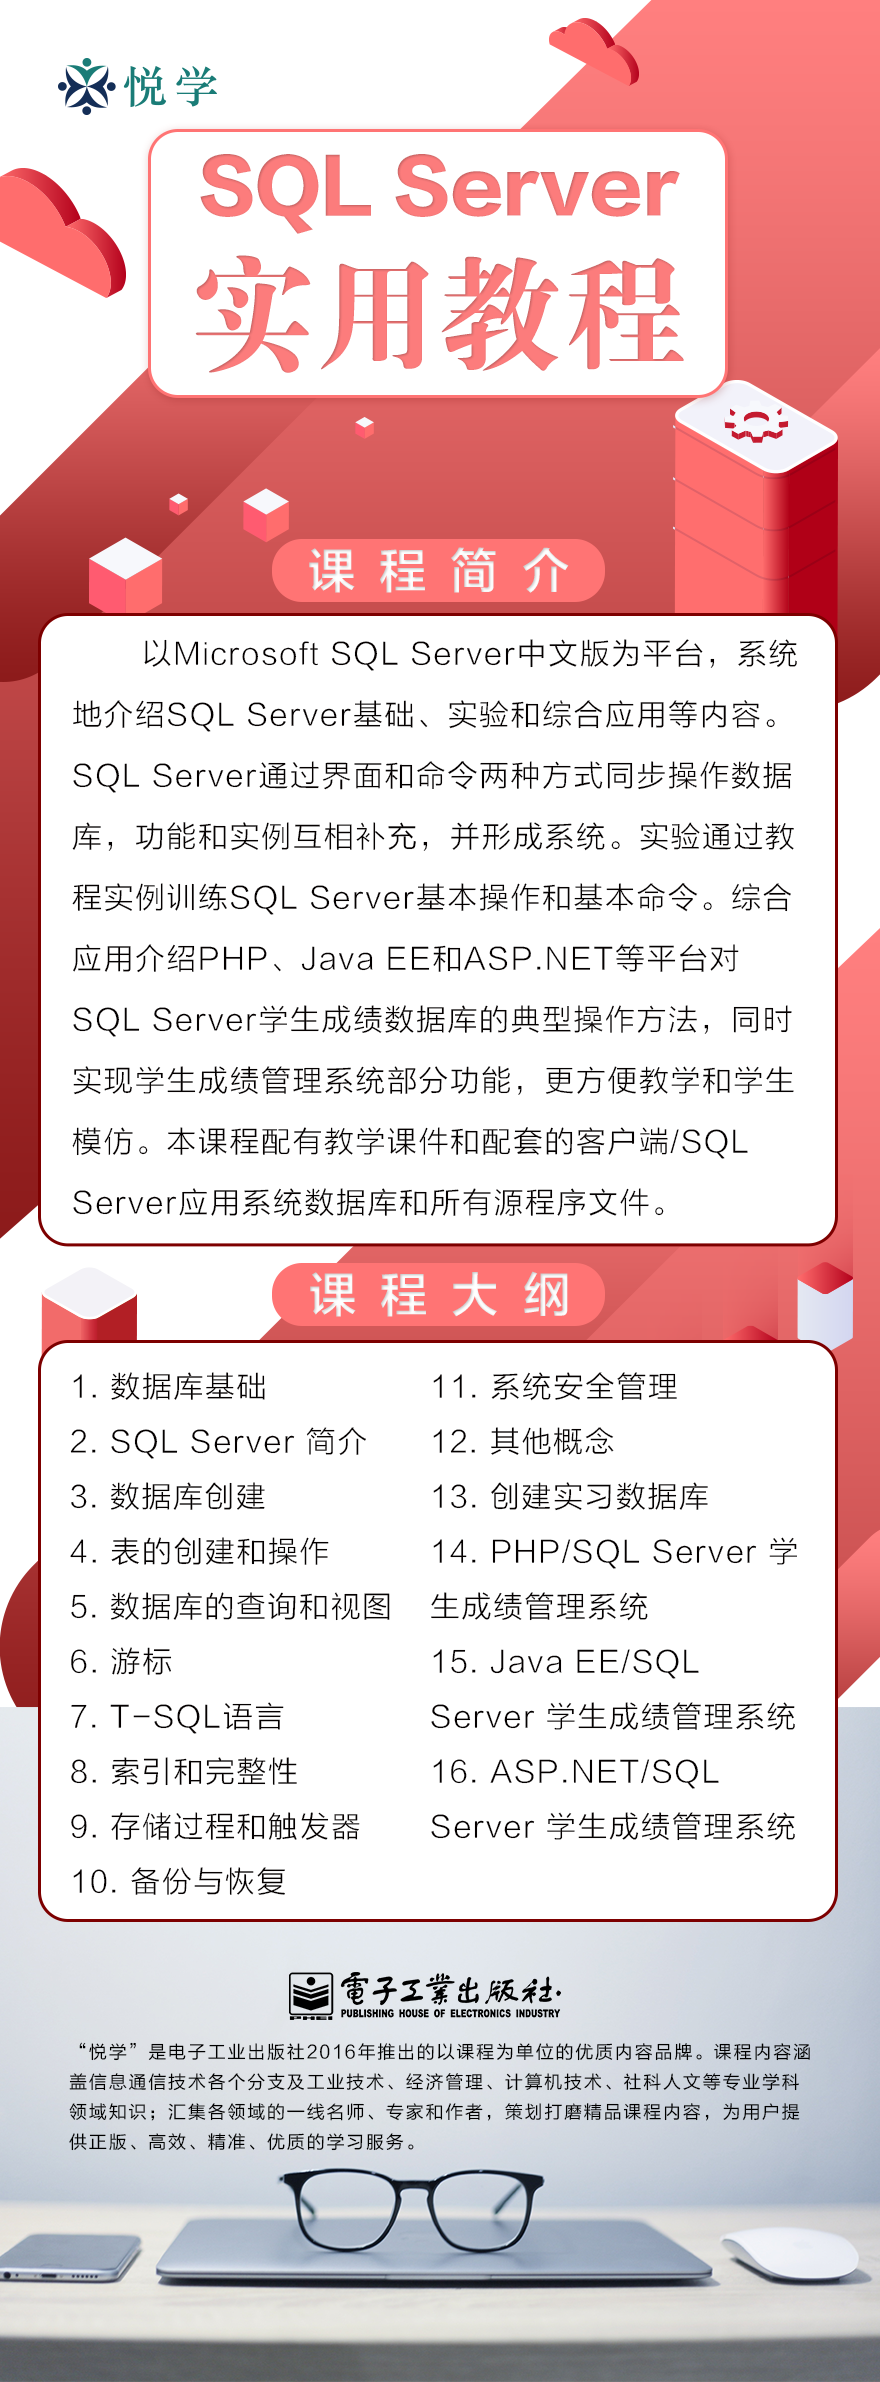 SQL Server实用教程.png